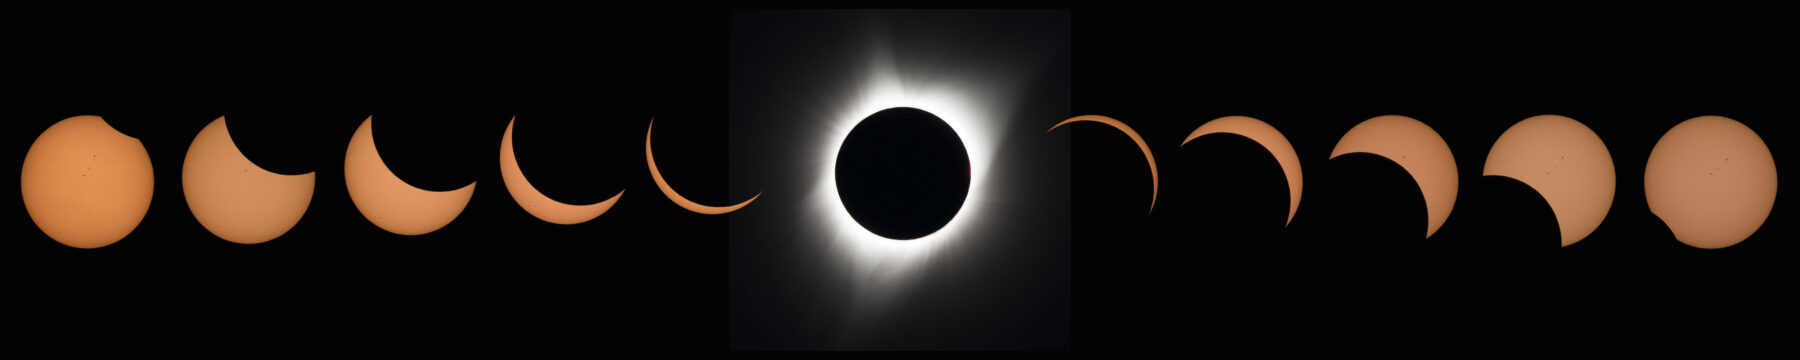 progression of a total solar eclipse